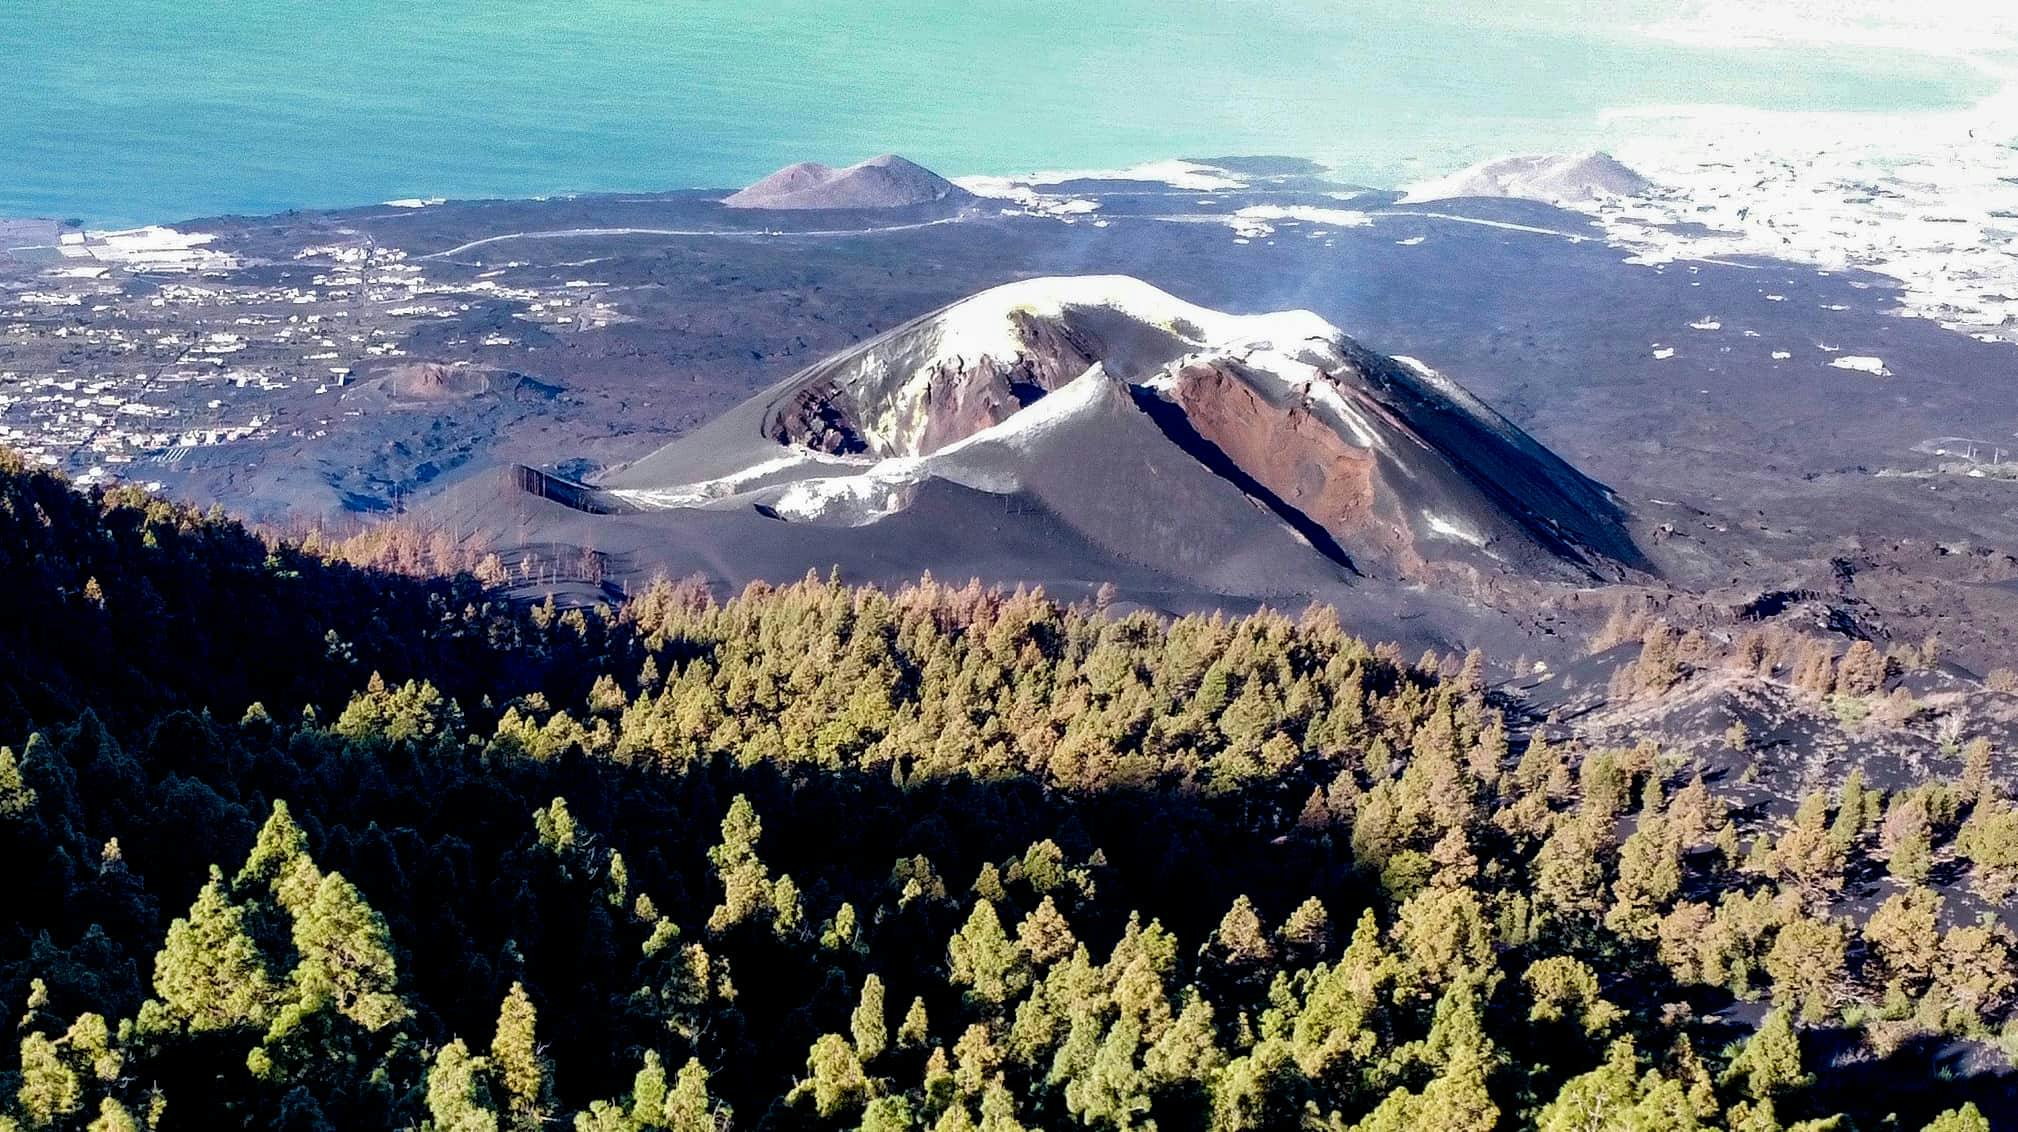 Tajogaite – Hiking tour over the new volcano on La Palma